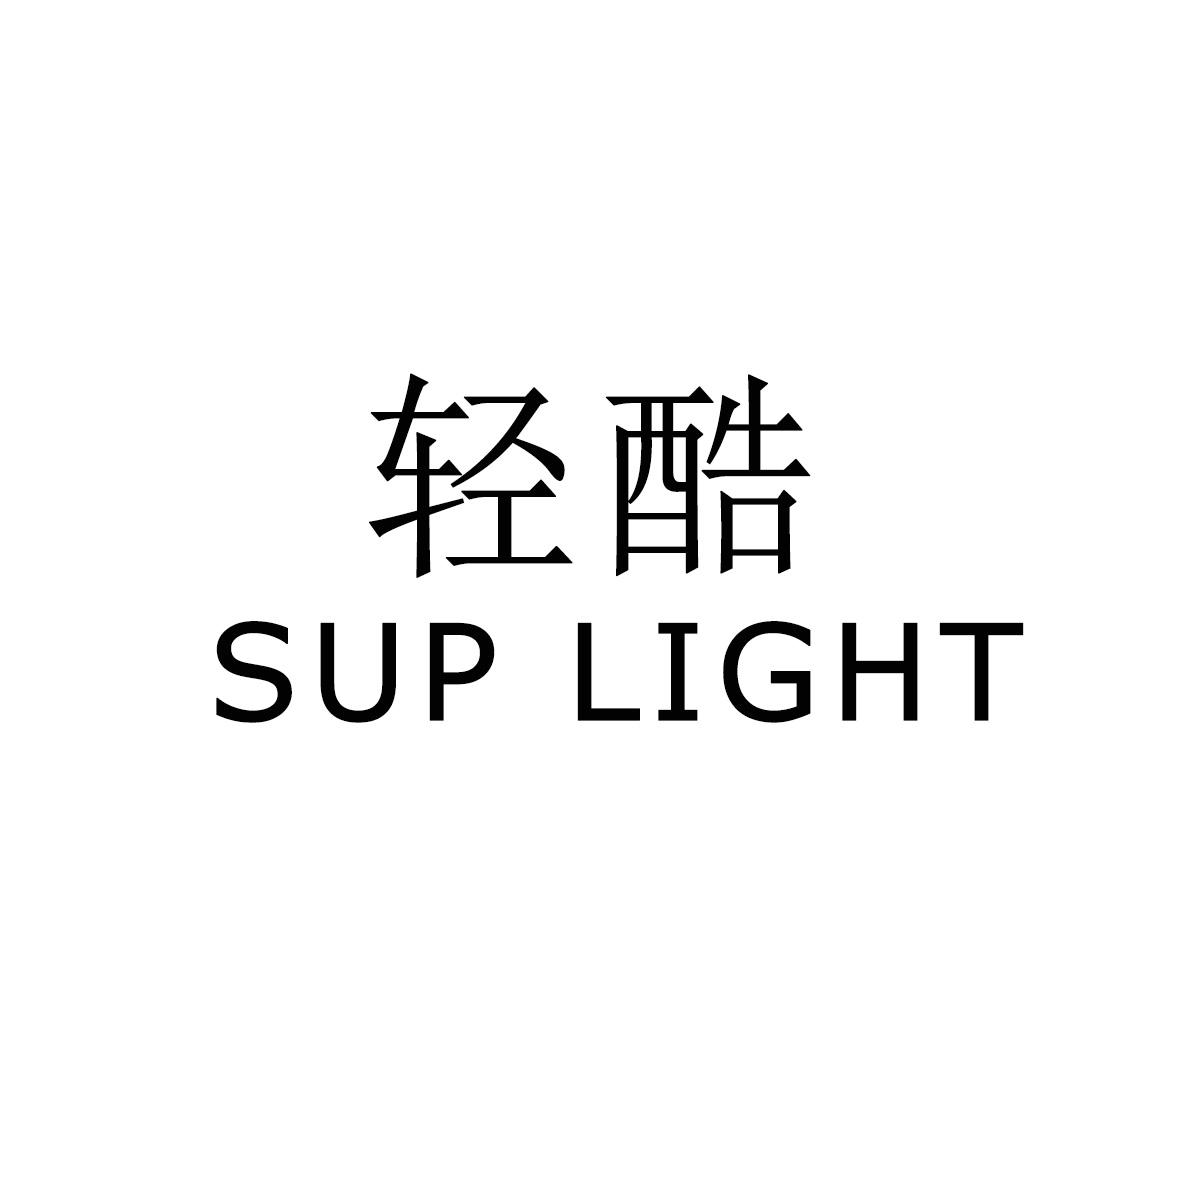  轻酷SUP LIGHT